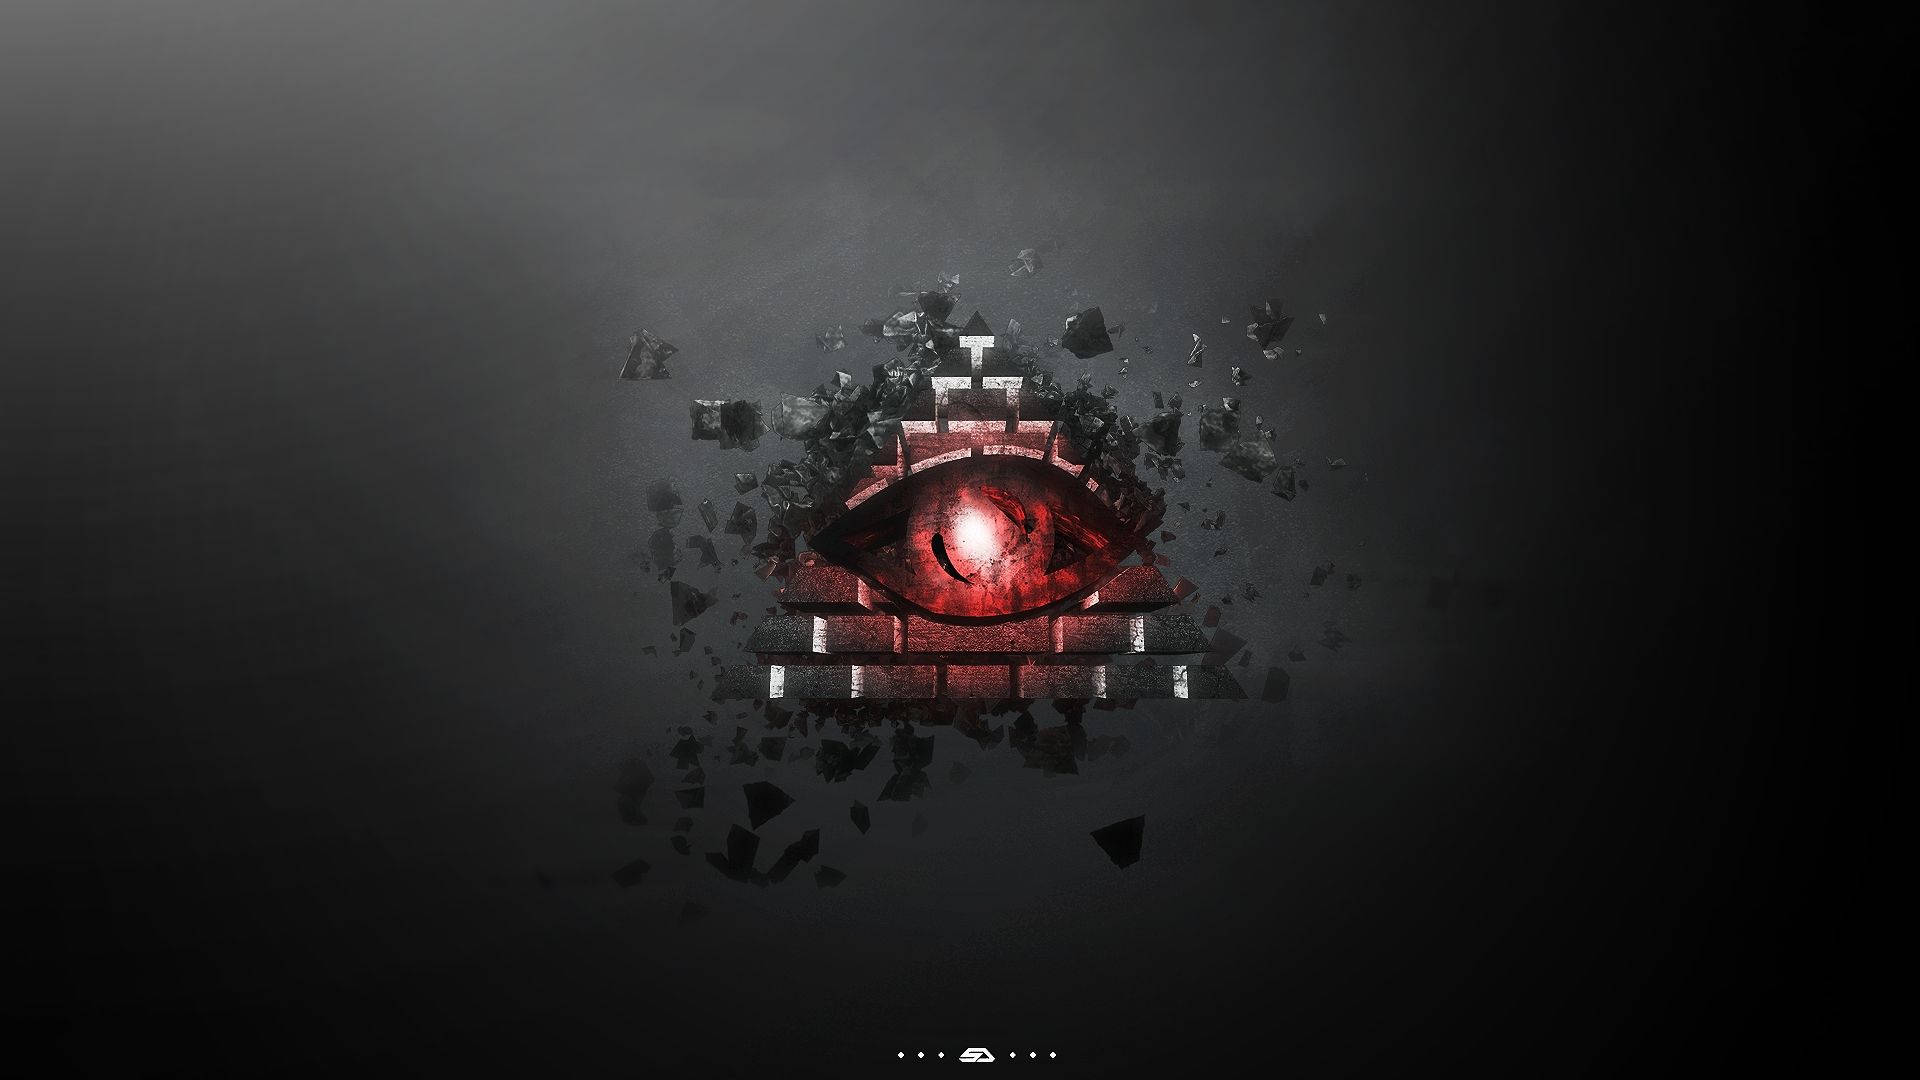 Illuminati Red Eye Illusion Wallpaper